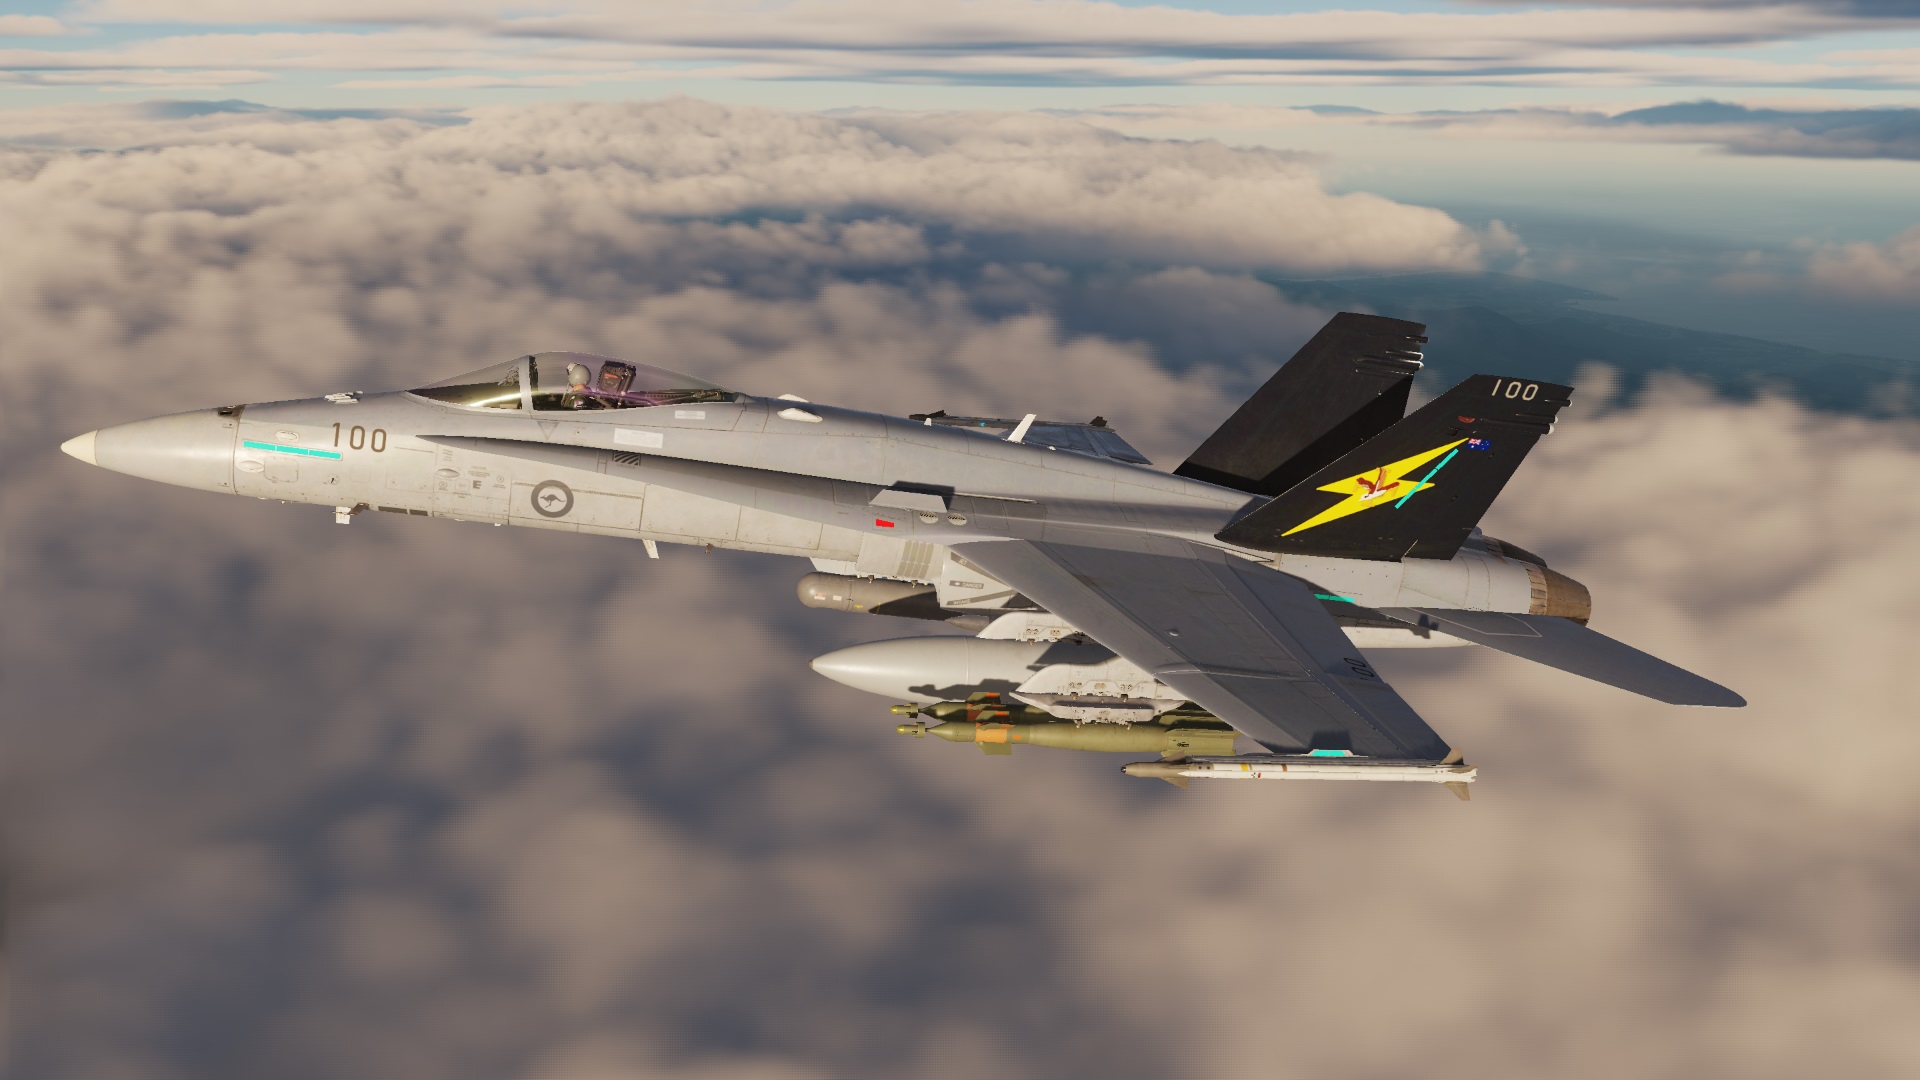 RAAF 1 Sqn (The Fighting First) F-18C 